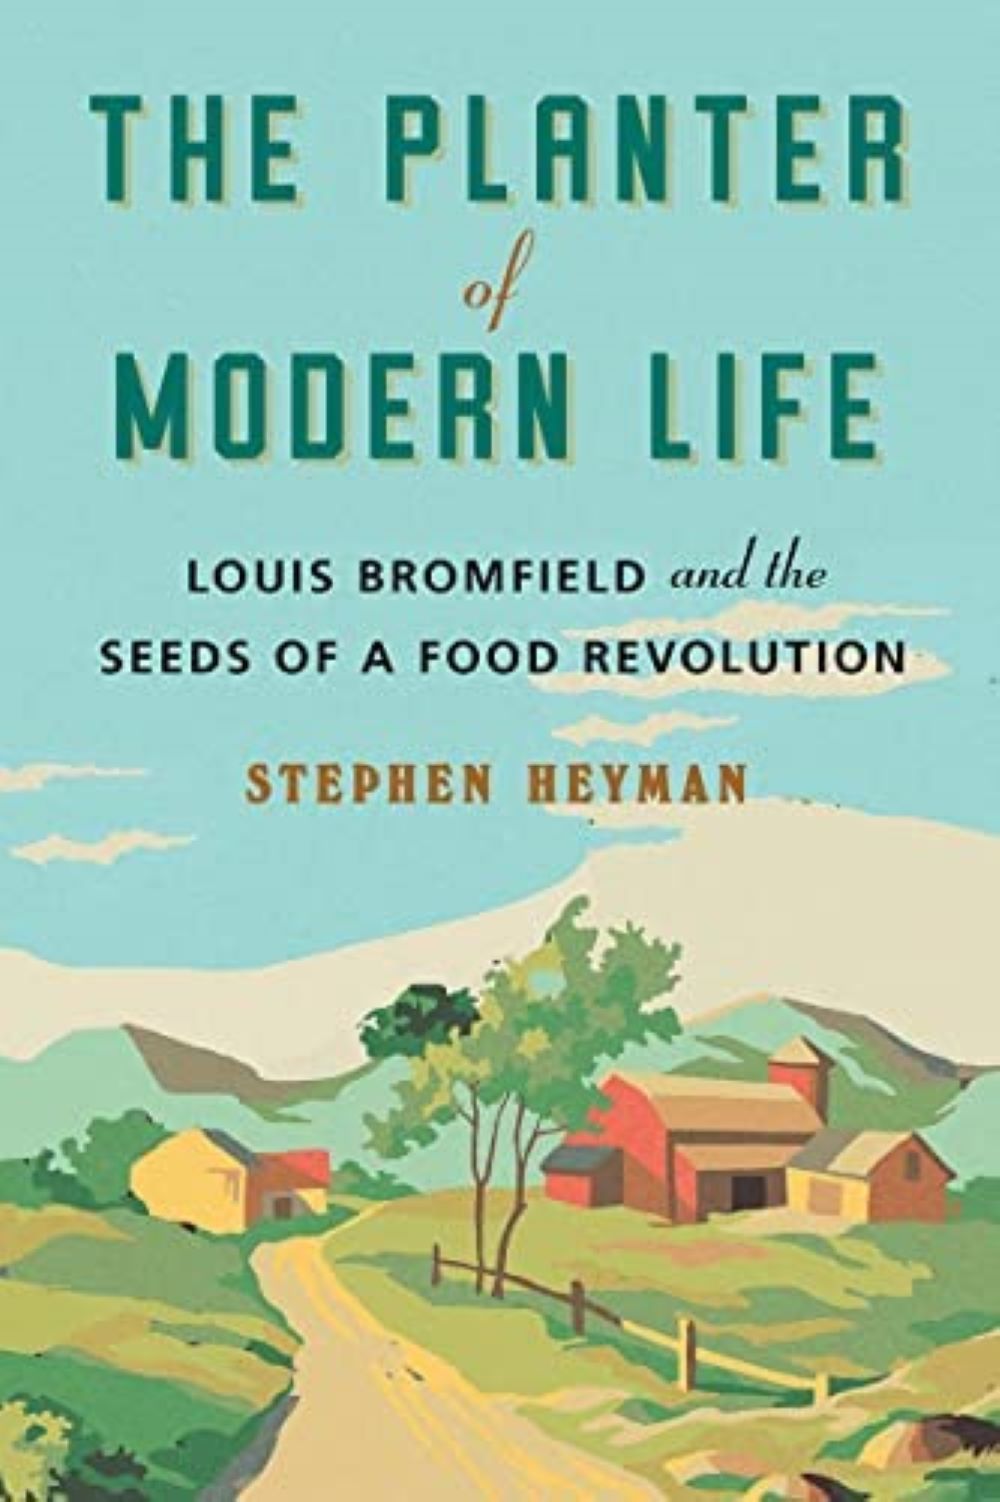 The Planter of Modern Life by Stephen Heyman